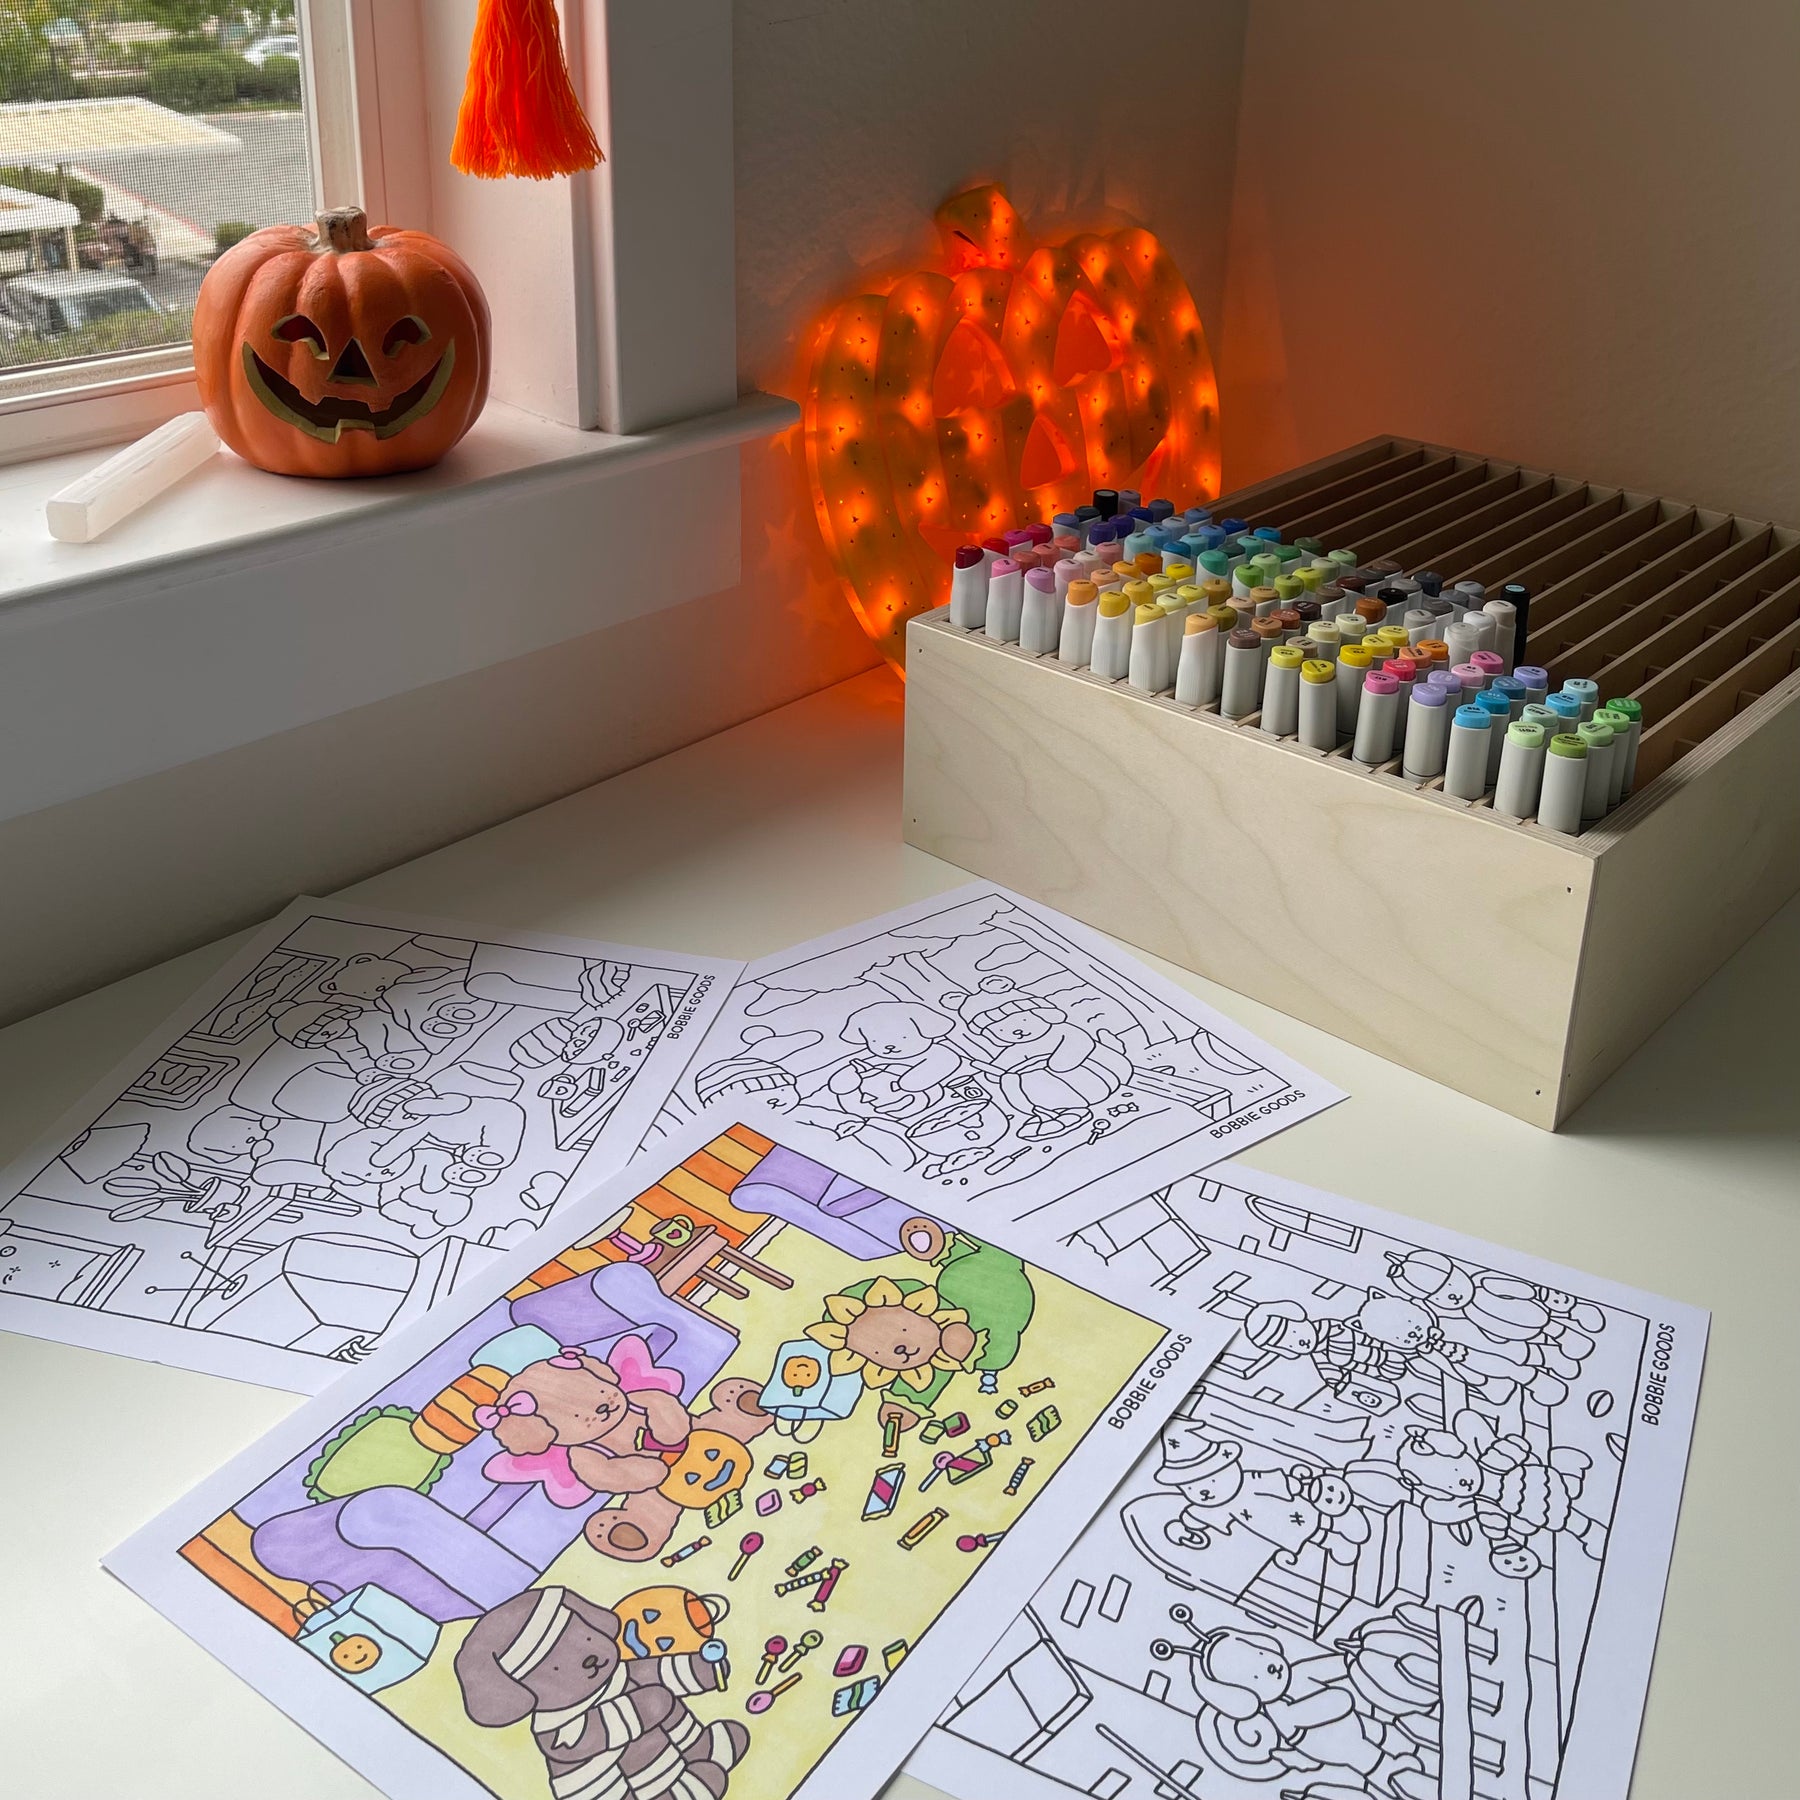 Digital Download • Halloween Coloring Pages – Bobbie Goods